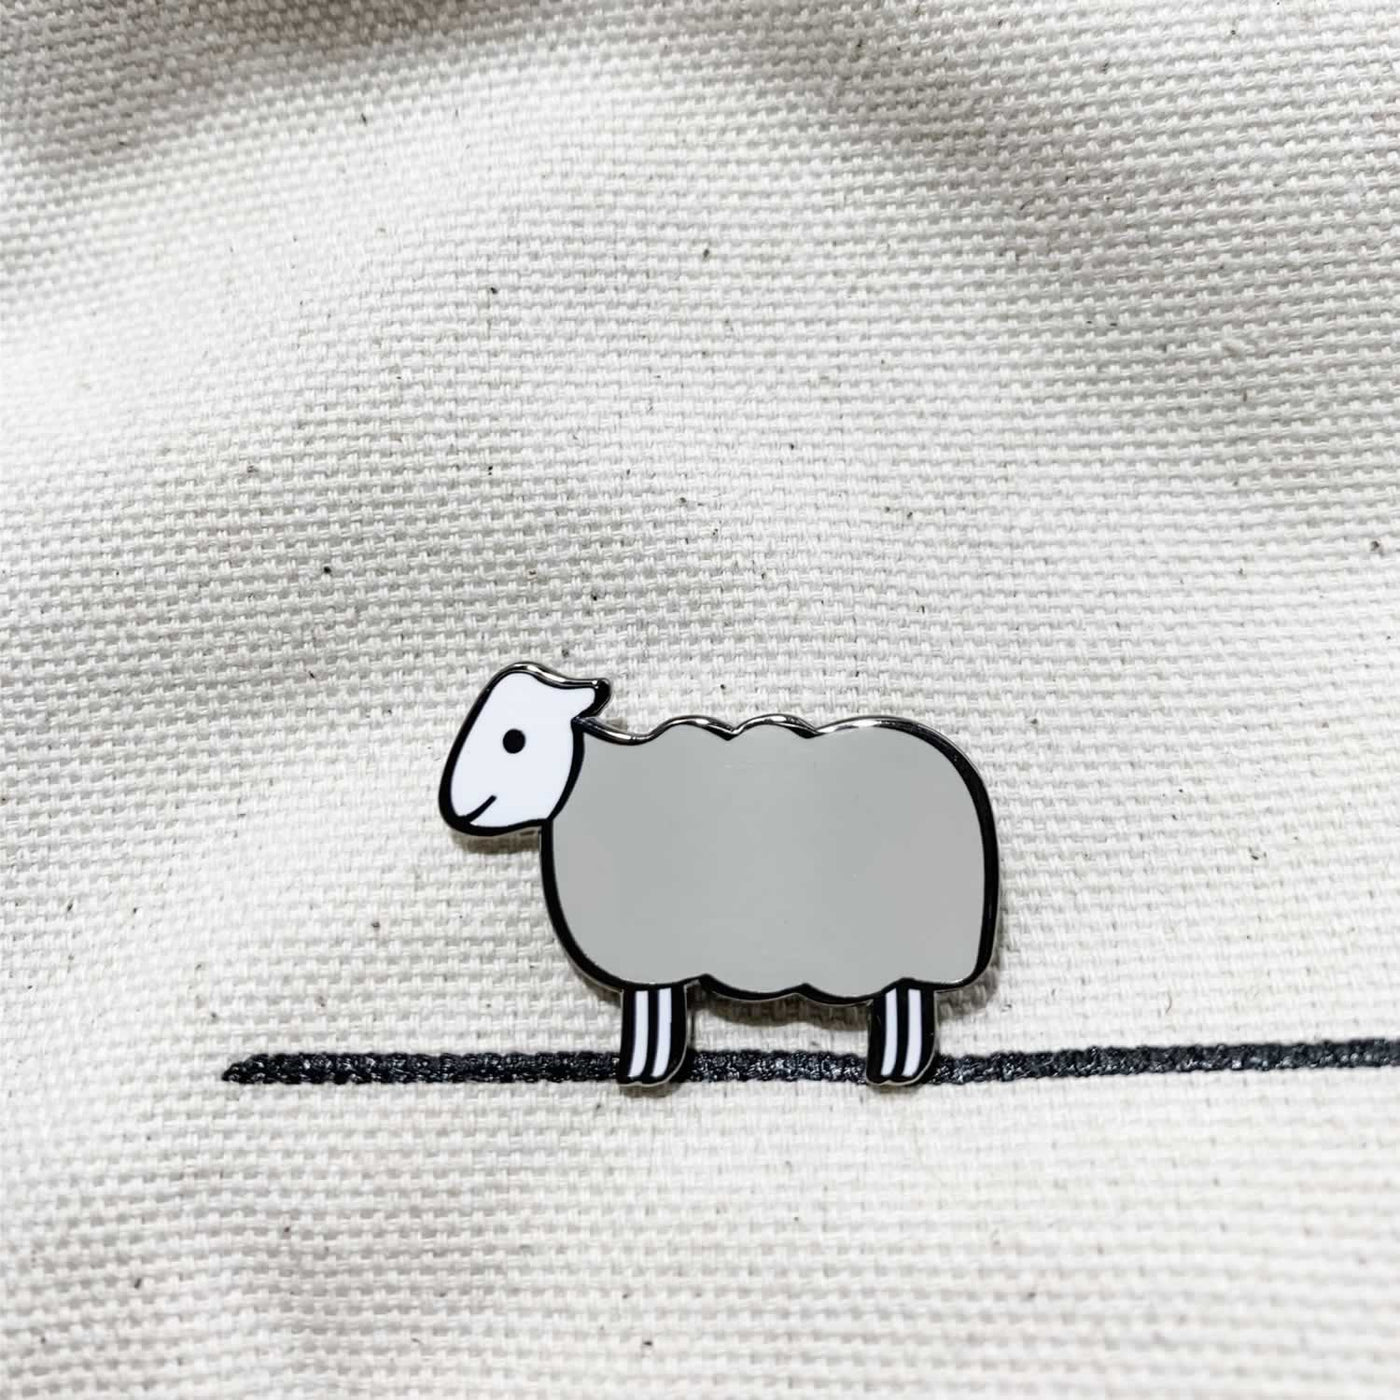 Sheep Enamel Pin on Material